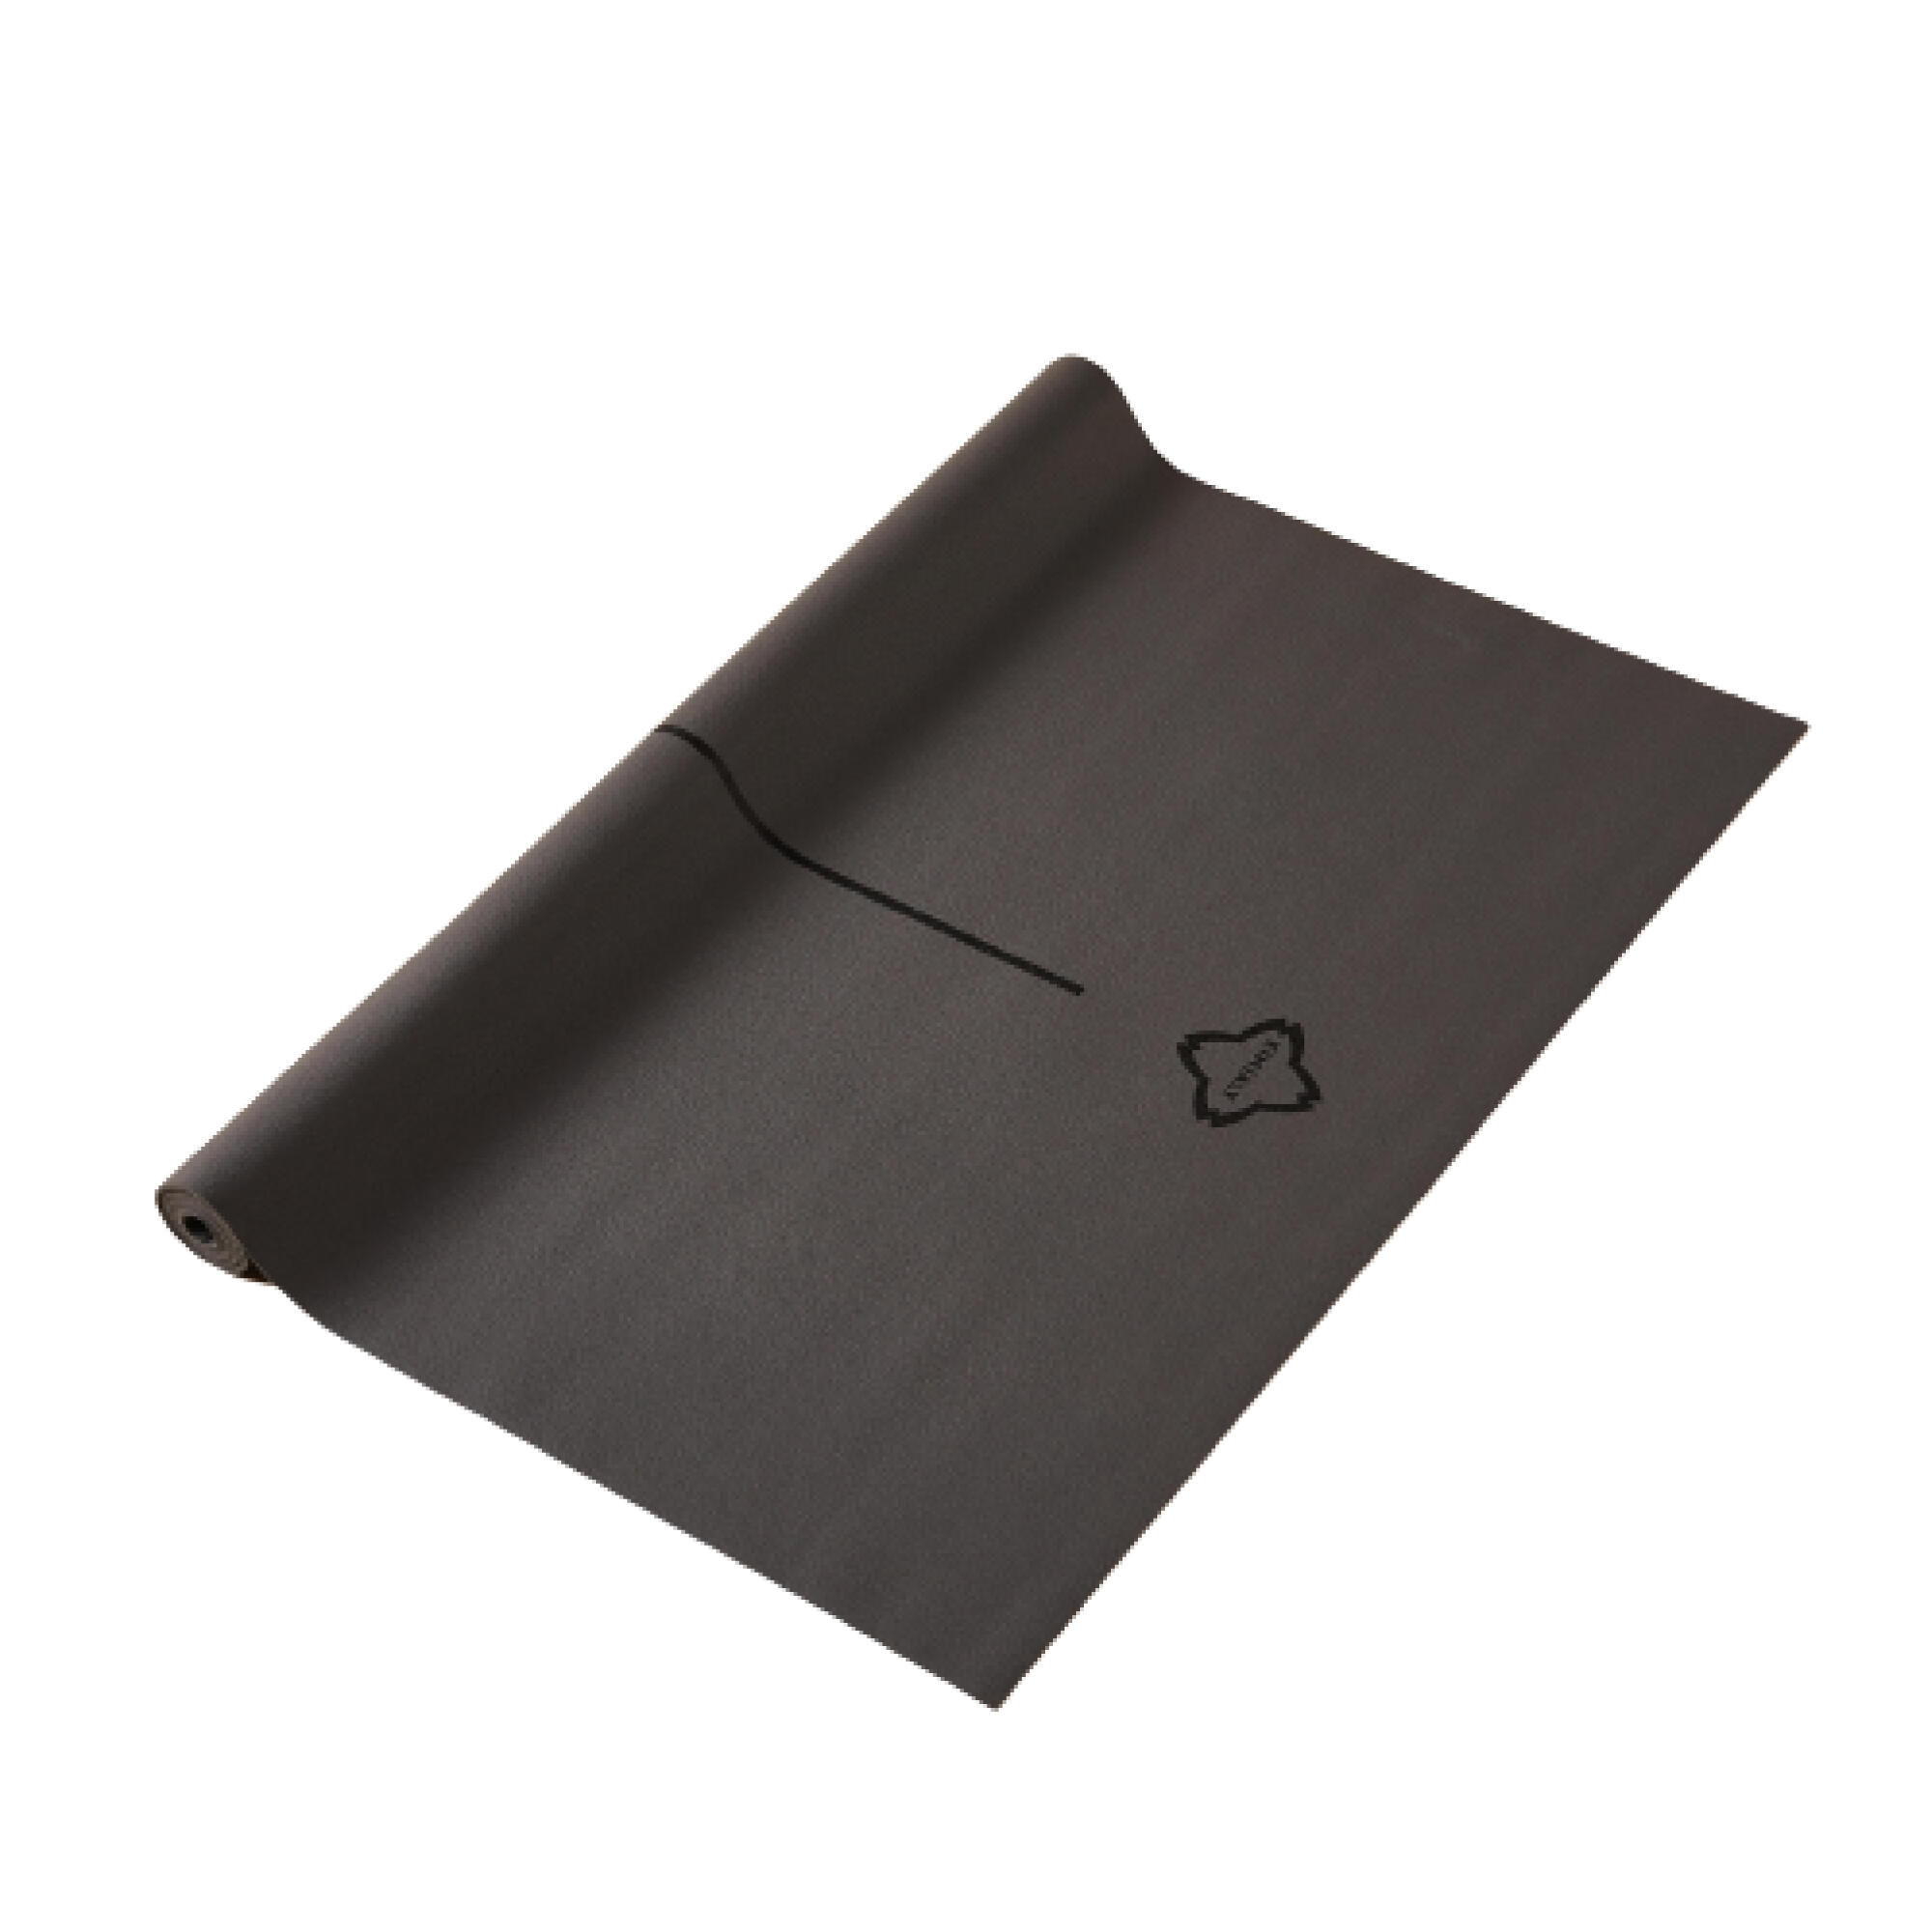 Foldable Travel Yoga Mat / Mat Cover 180 cm ⨯ 62 cm ⨯ 1.33 mm - Grey 2/6